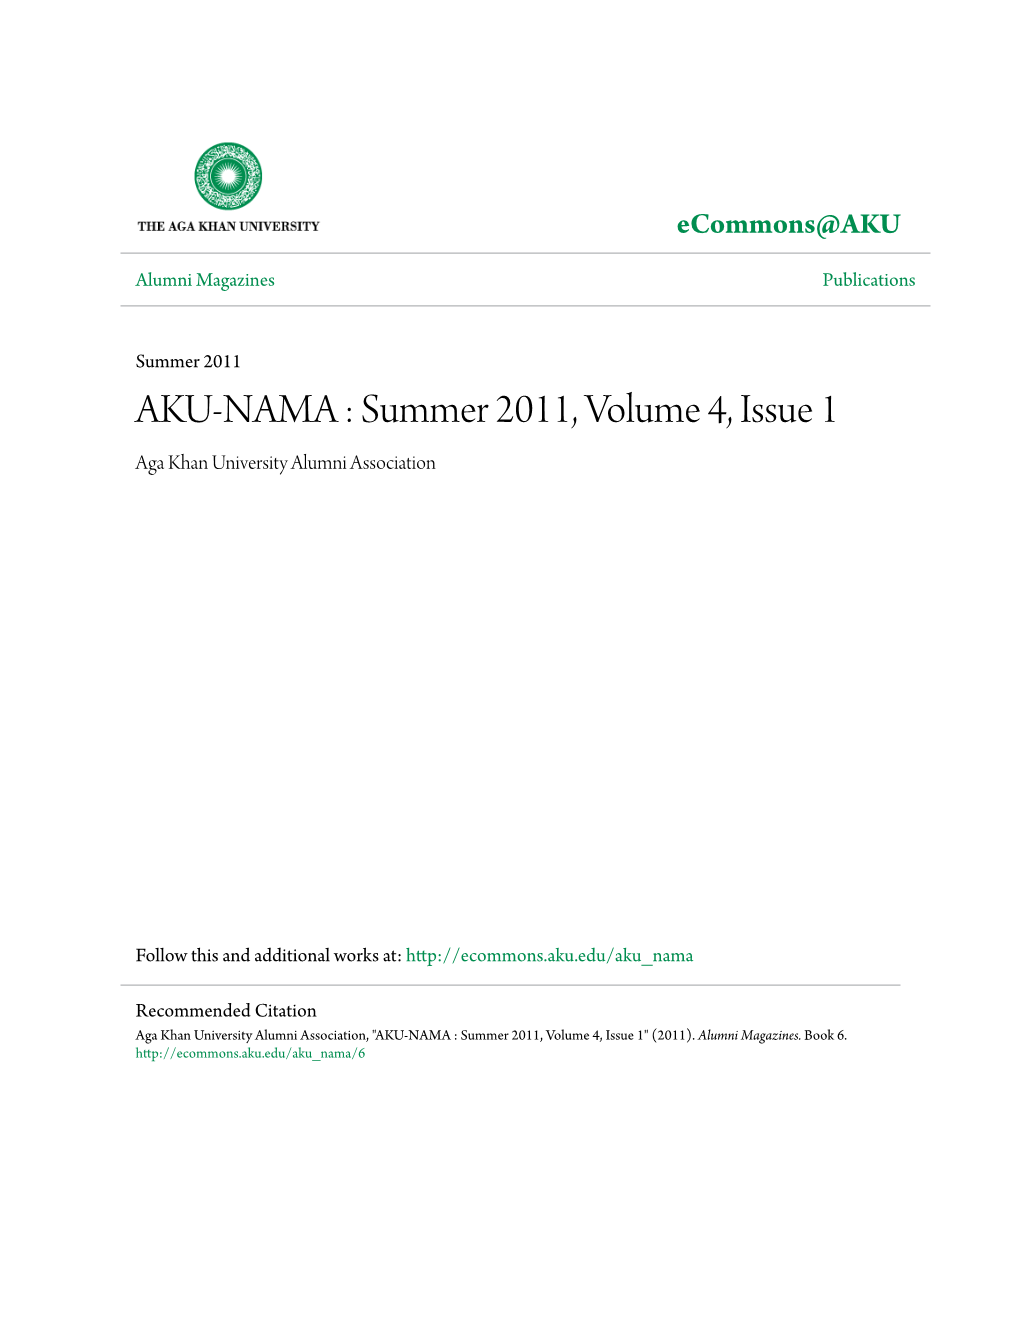 AKU-NAMA : Summer 2011, Volume 4, Issue 1 Aga Khan University Alumni Association